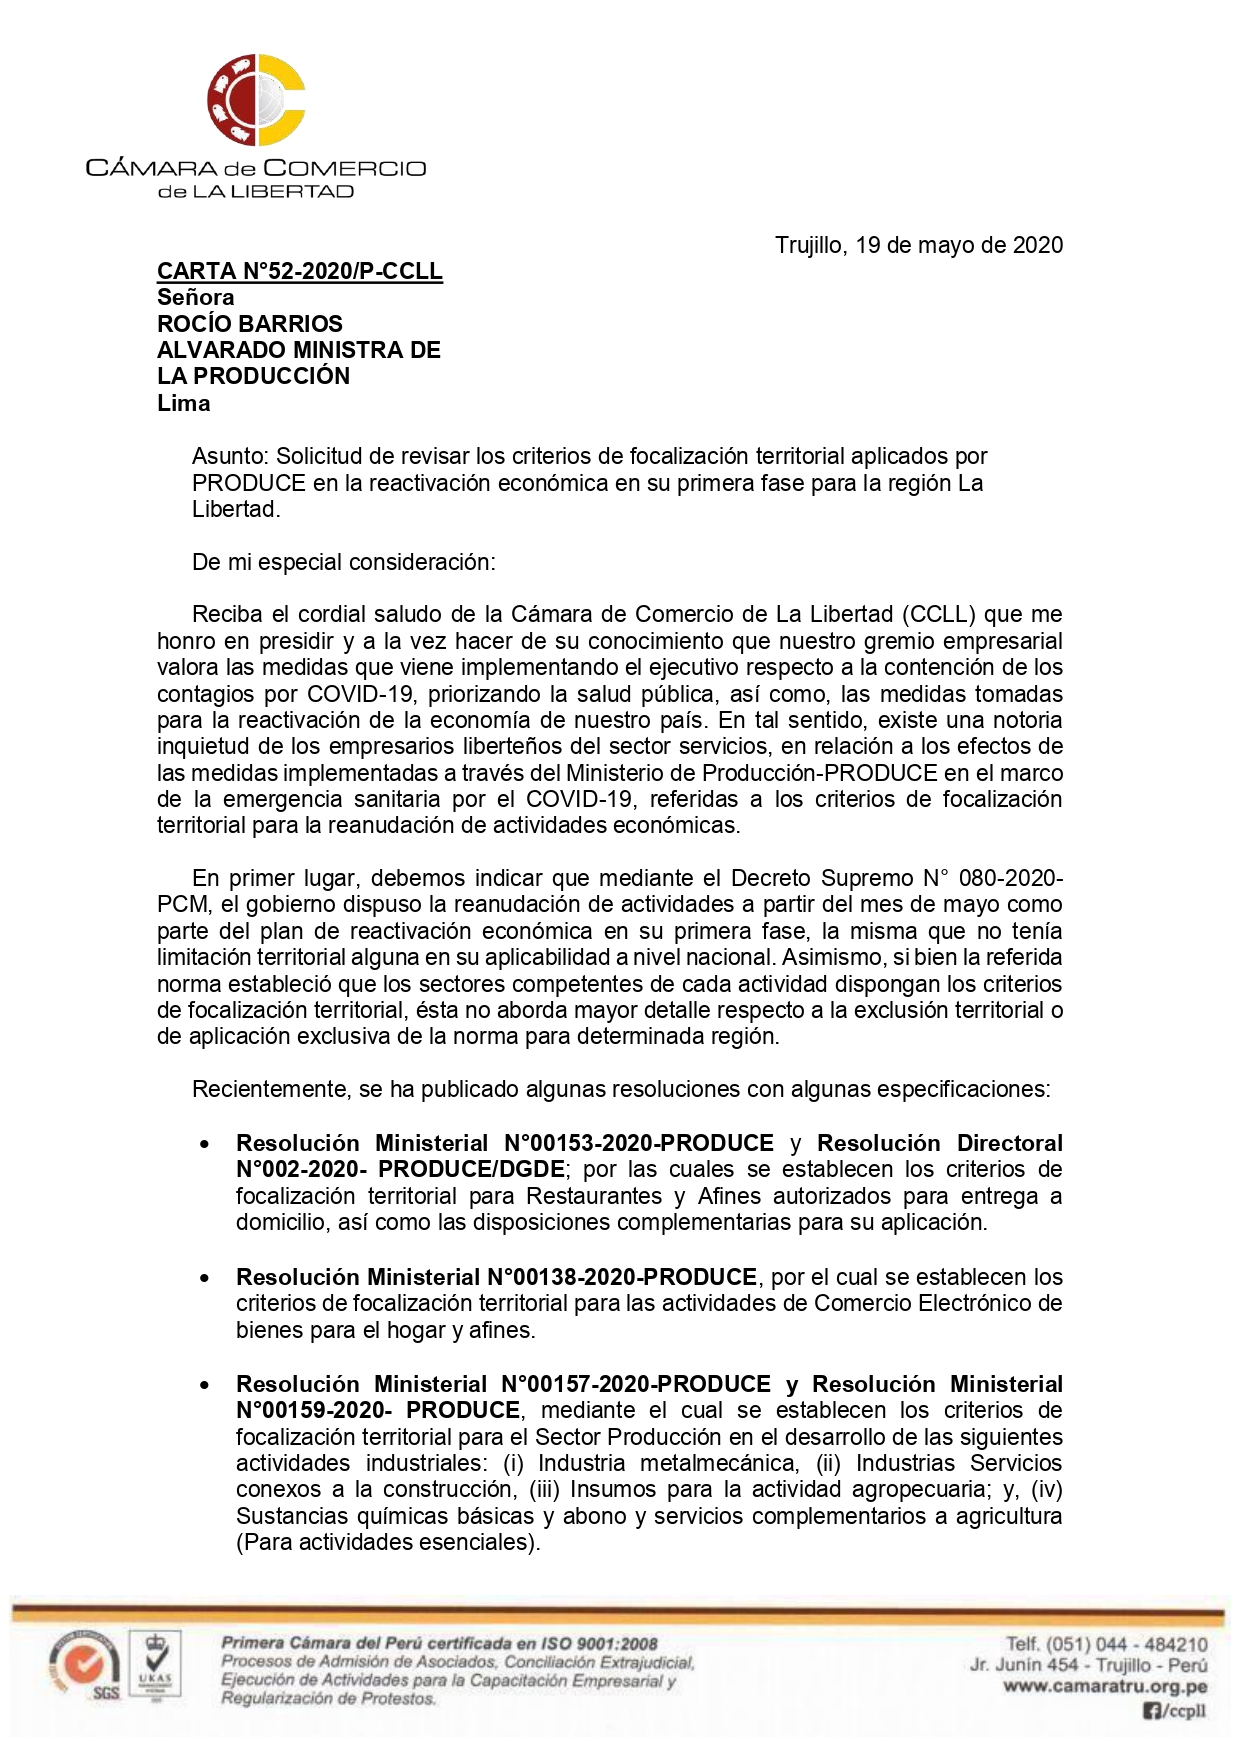 19.05.20 Carta solicita revisar criterios de focalización territorial aplicados por Produce Produce page 0001